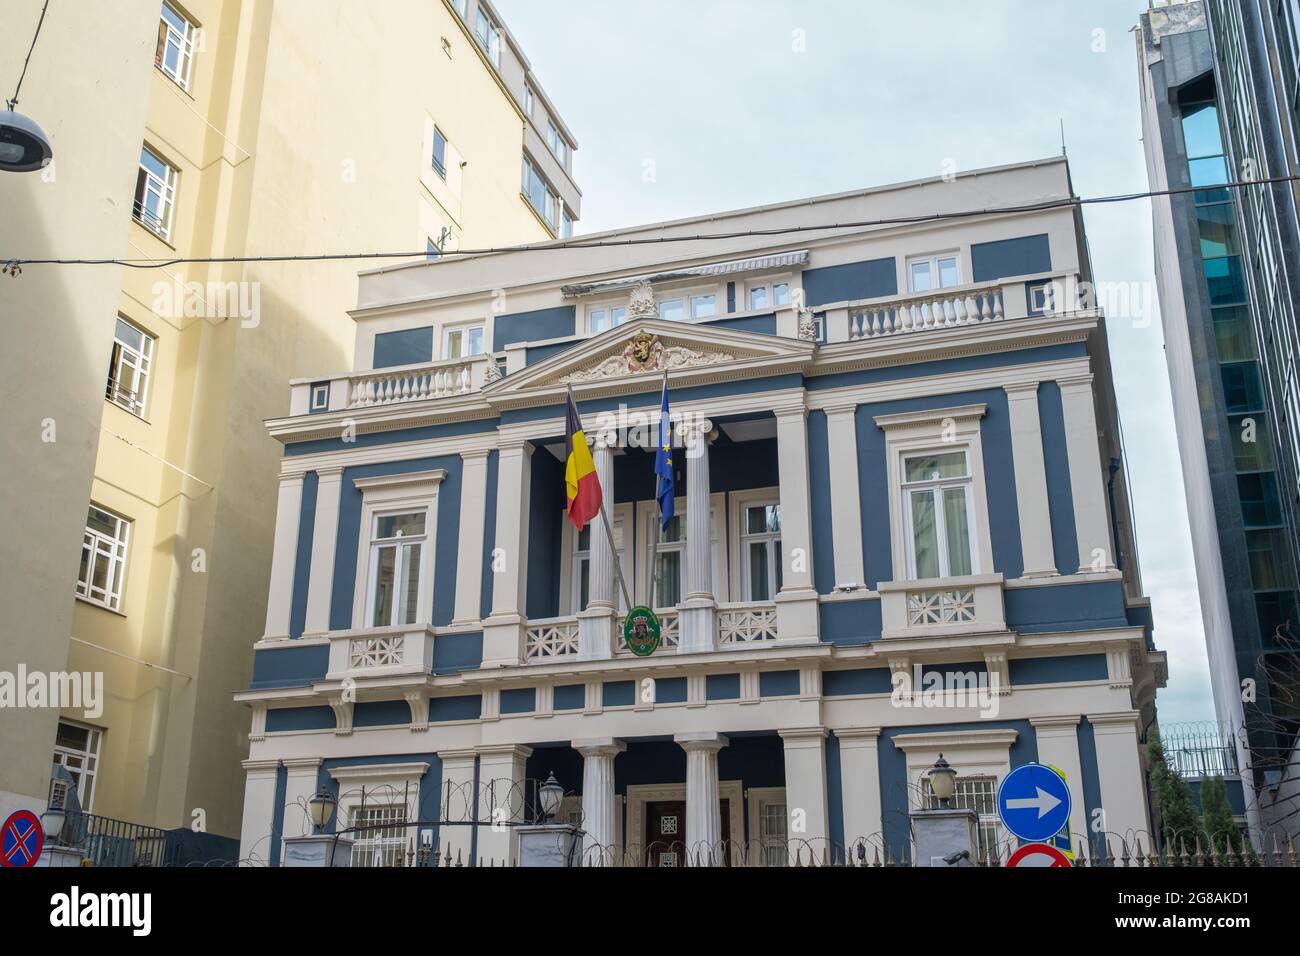 beyoglu istanbul turquie 02 17 2021 batiment de l ambassade et du consulat de belgique en turquie avec drapeau de la belgique et drapeau de l union europeenne avec espace copie photo stock alamy